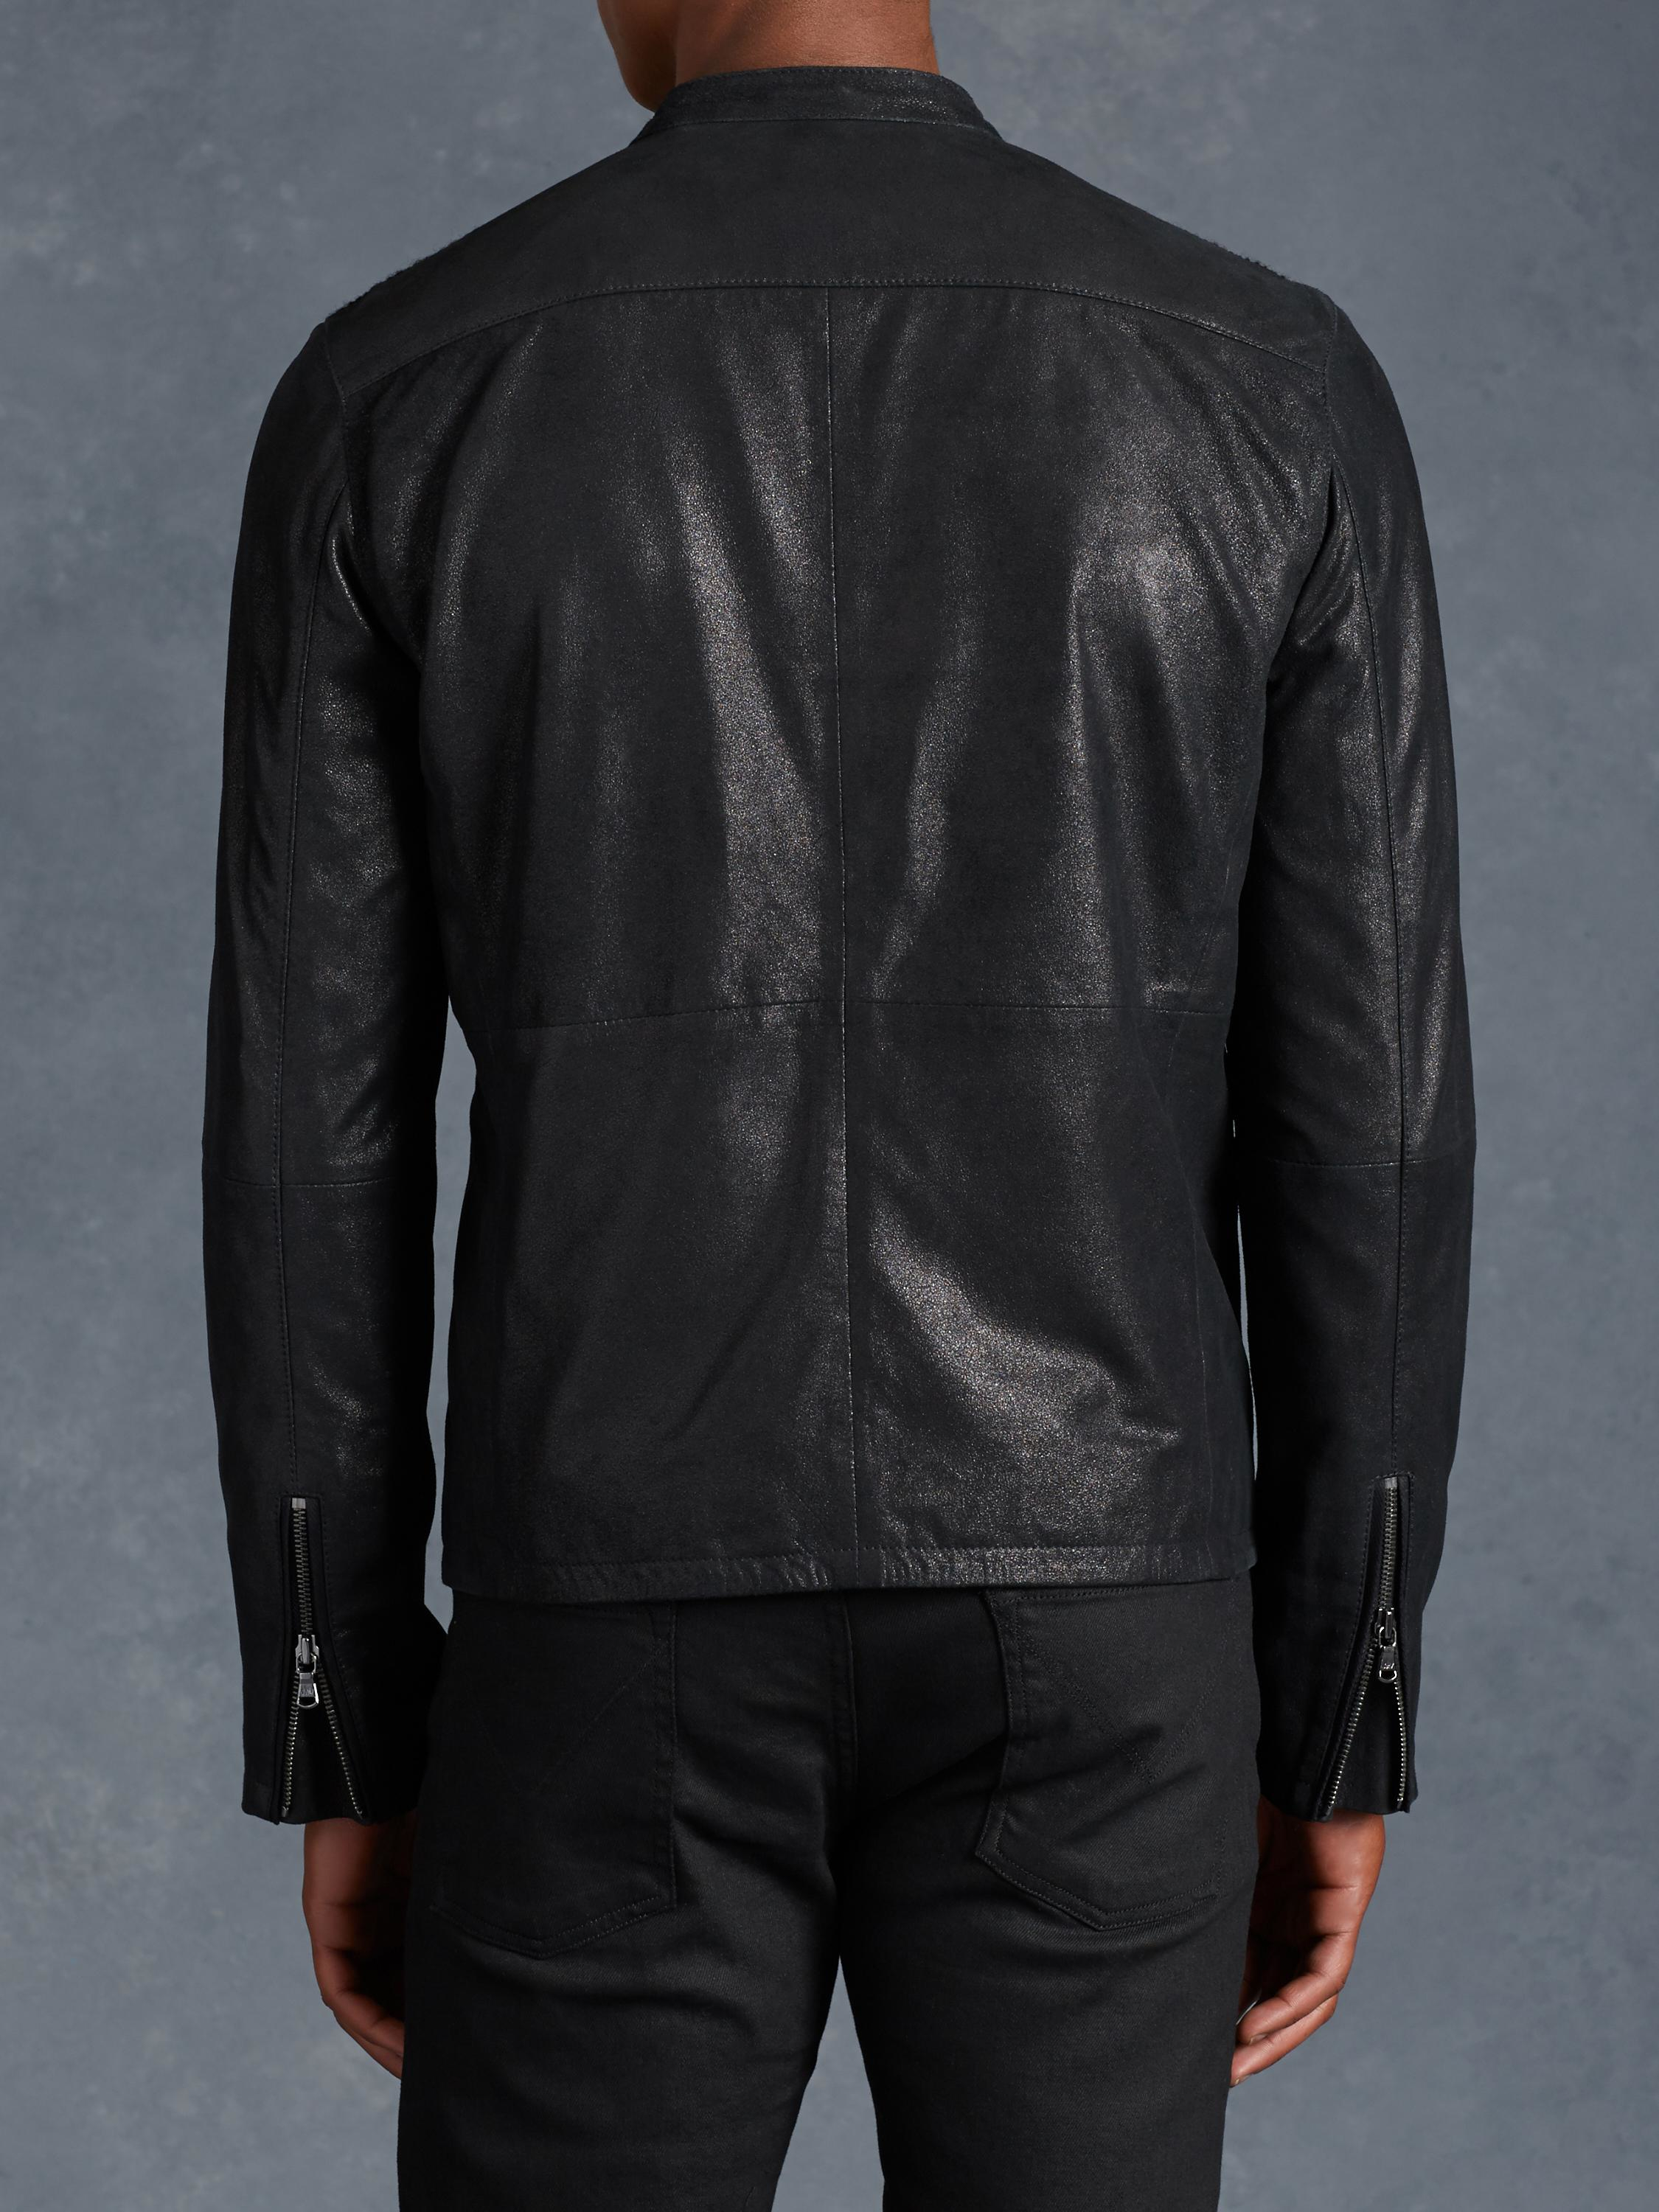 Lyst - John Varvatos Goatskin Racer Jacket in Black for Men